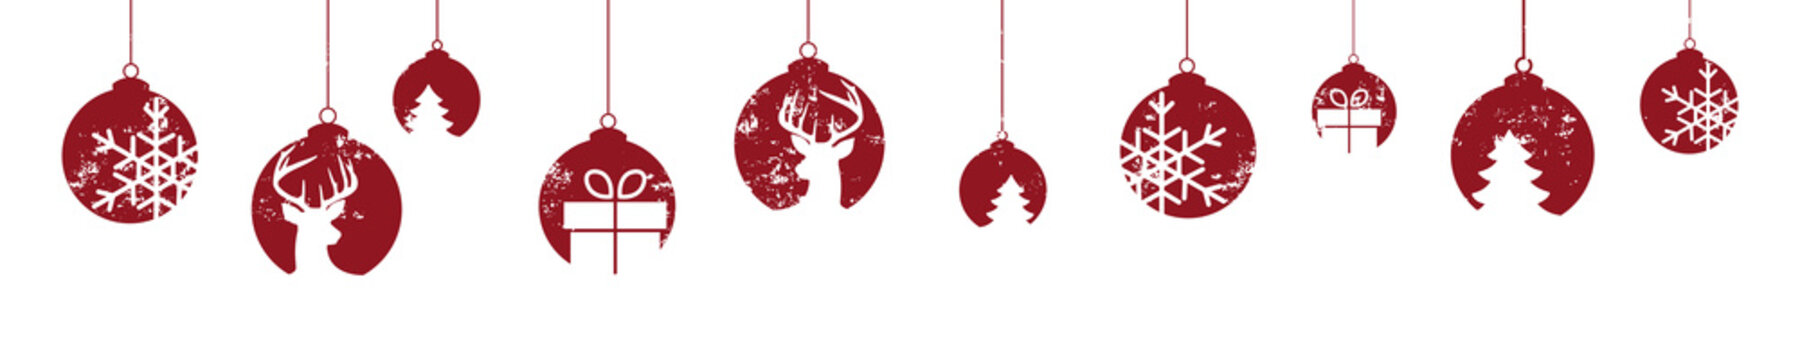 Weihnachten Christbaumkugel Banner rot